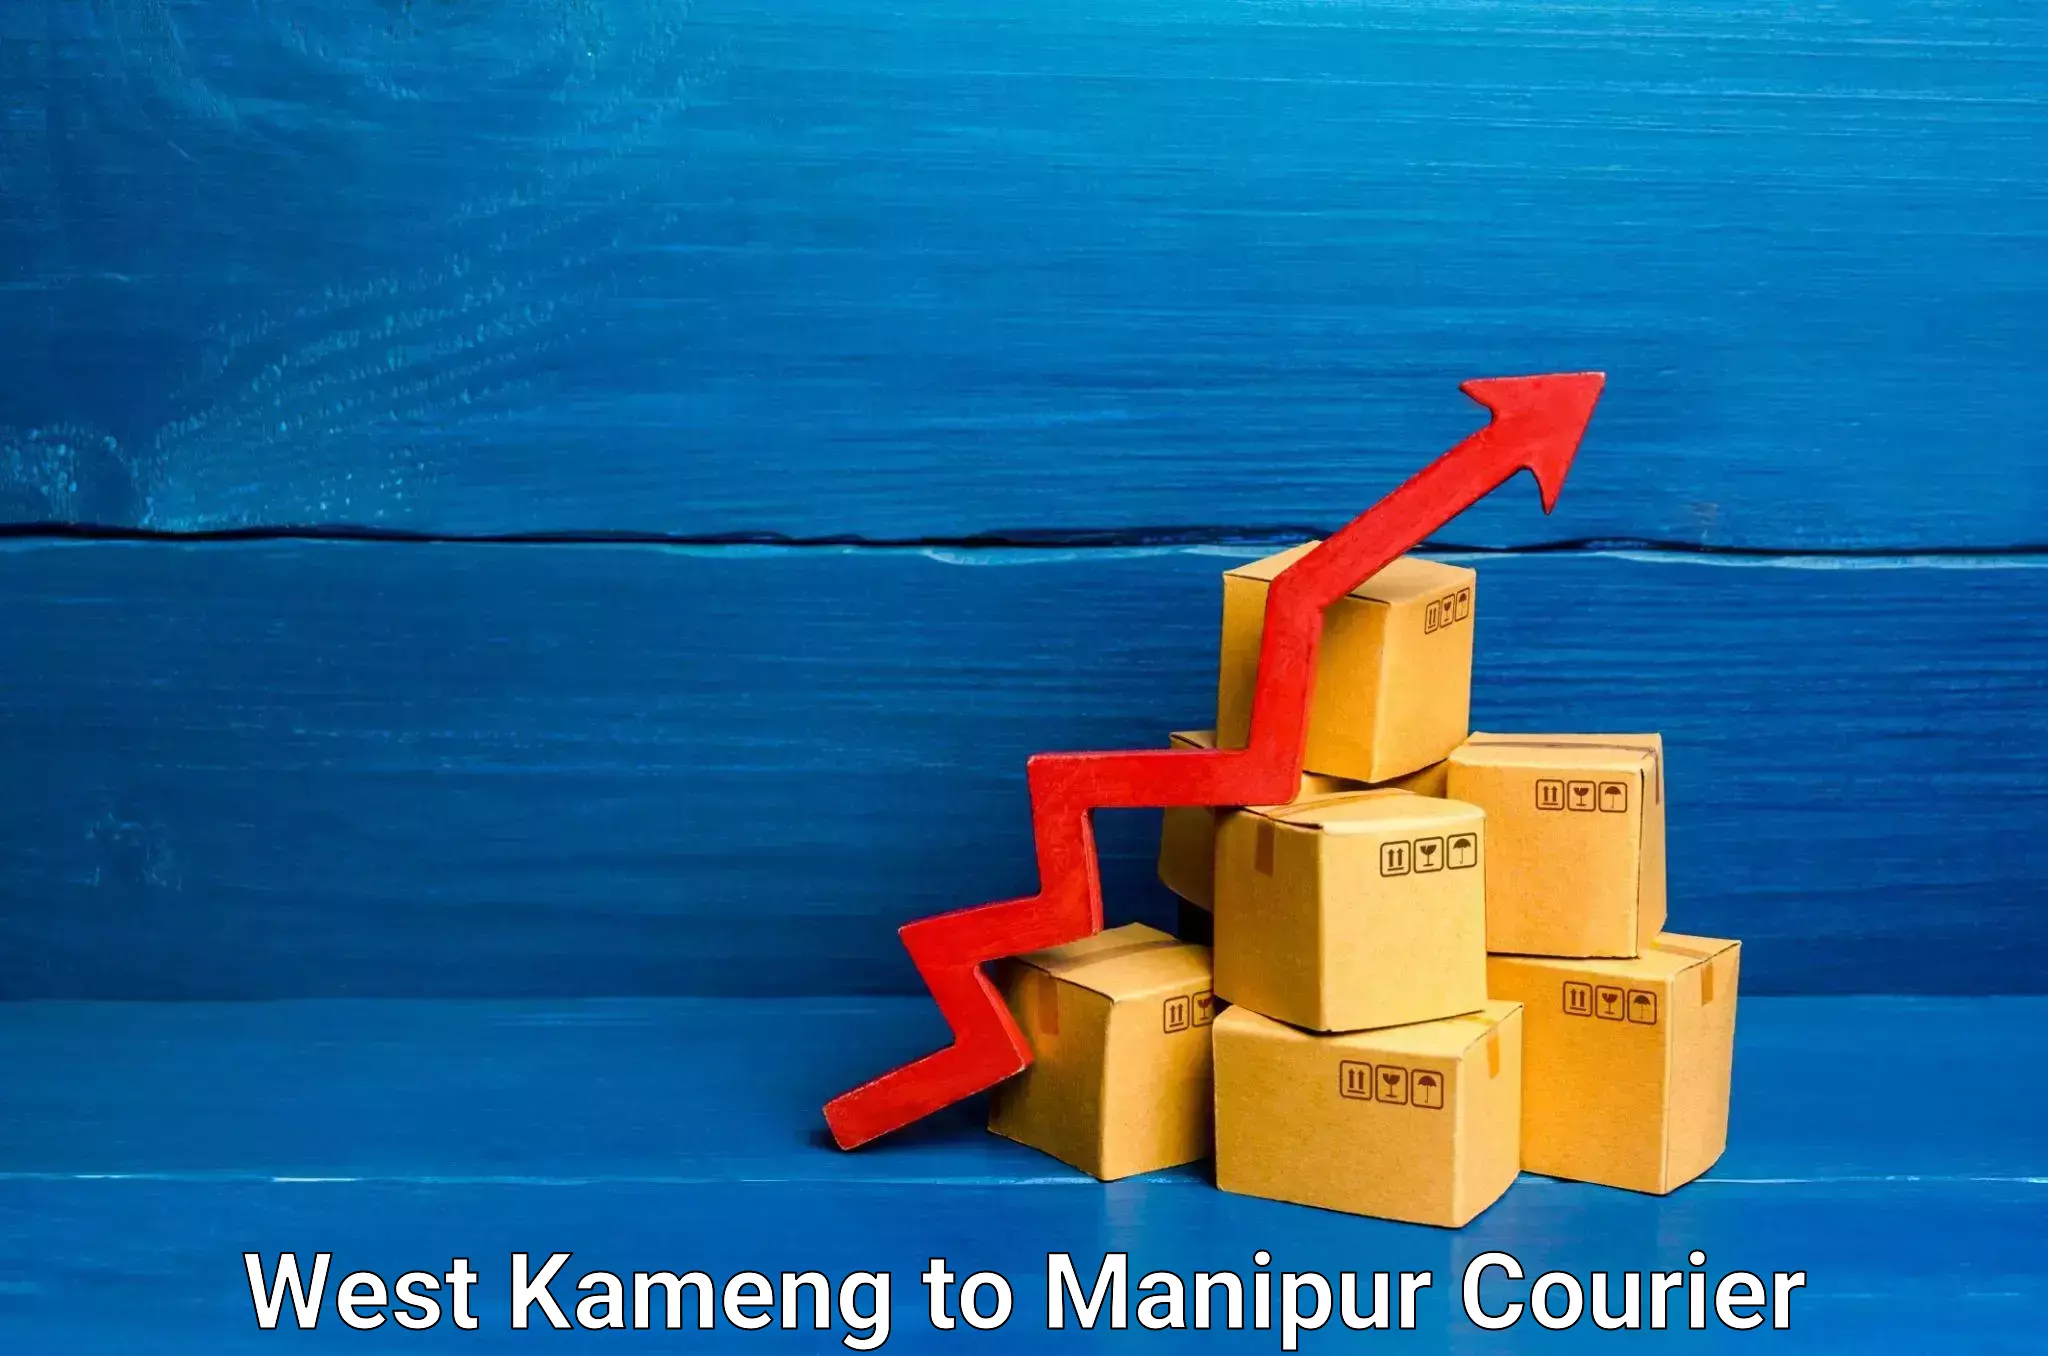 Global logistics network West Kameng to Manipur